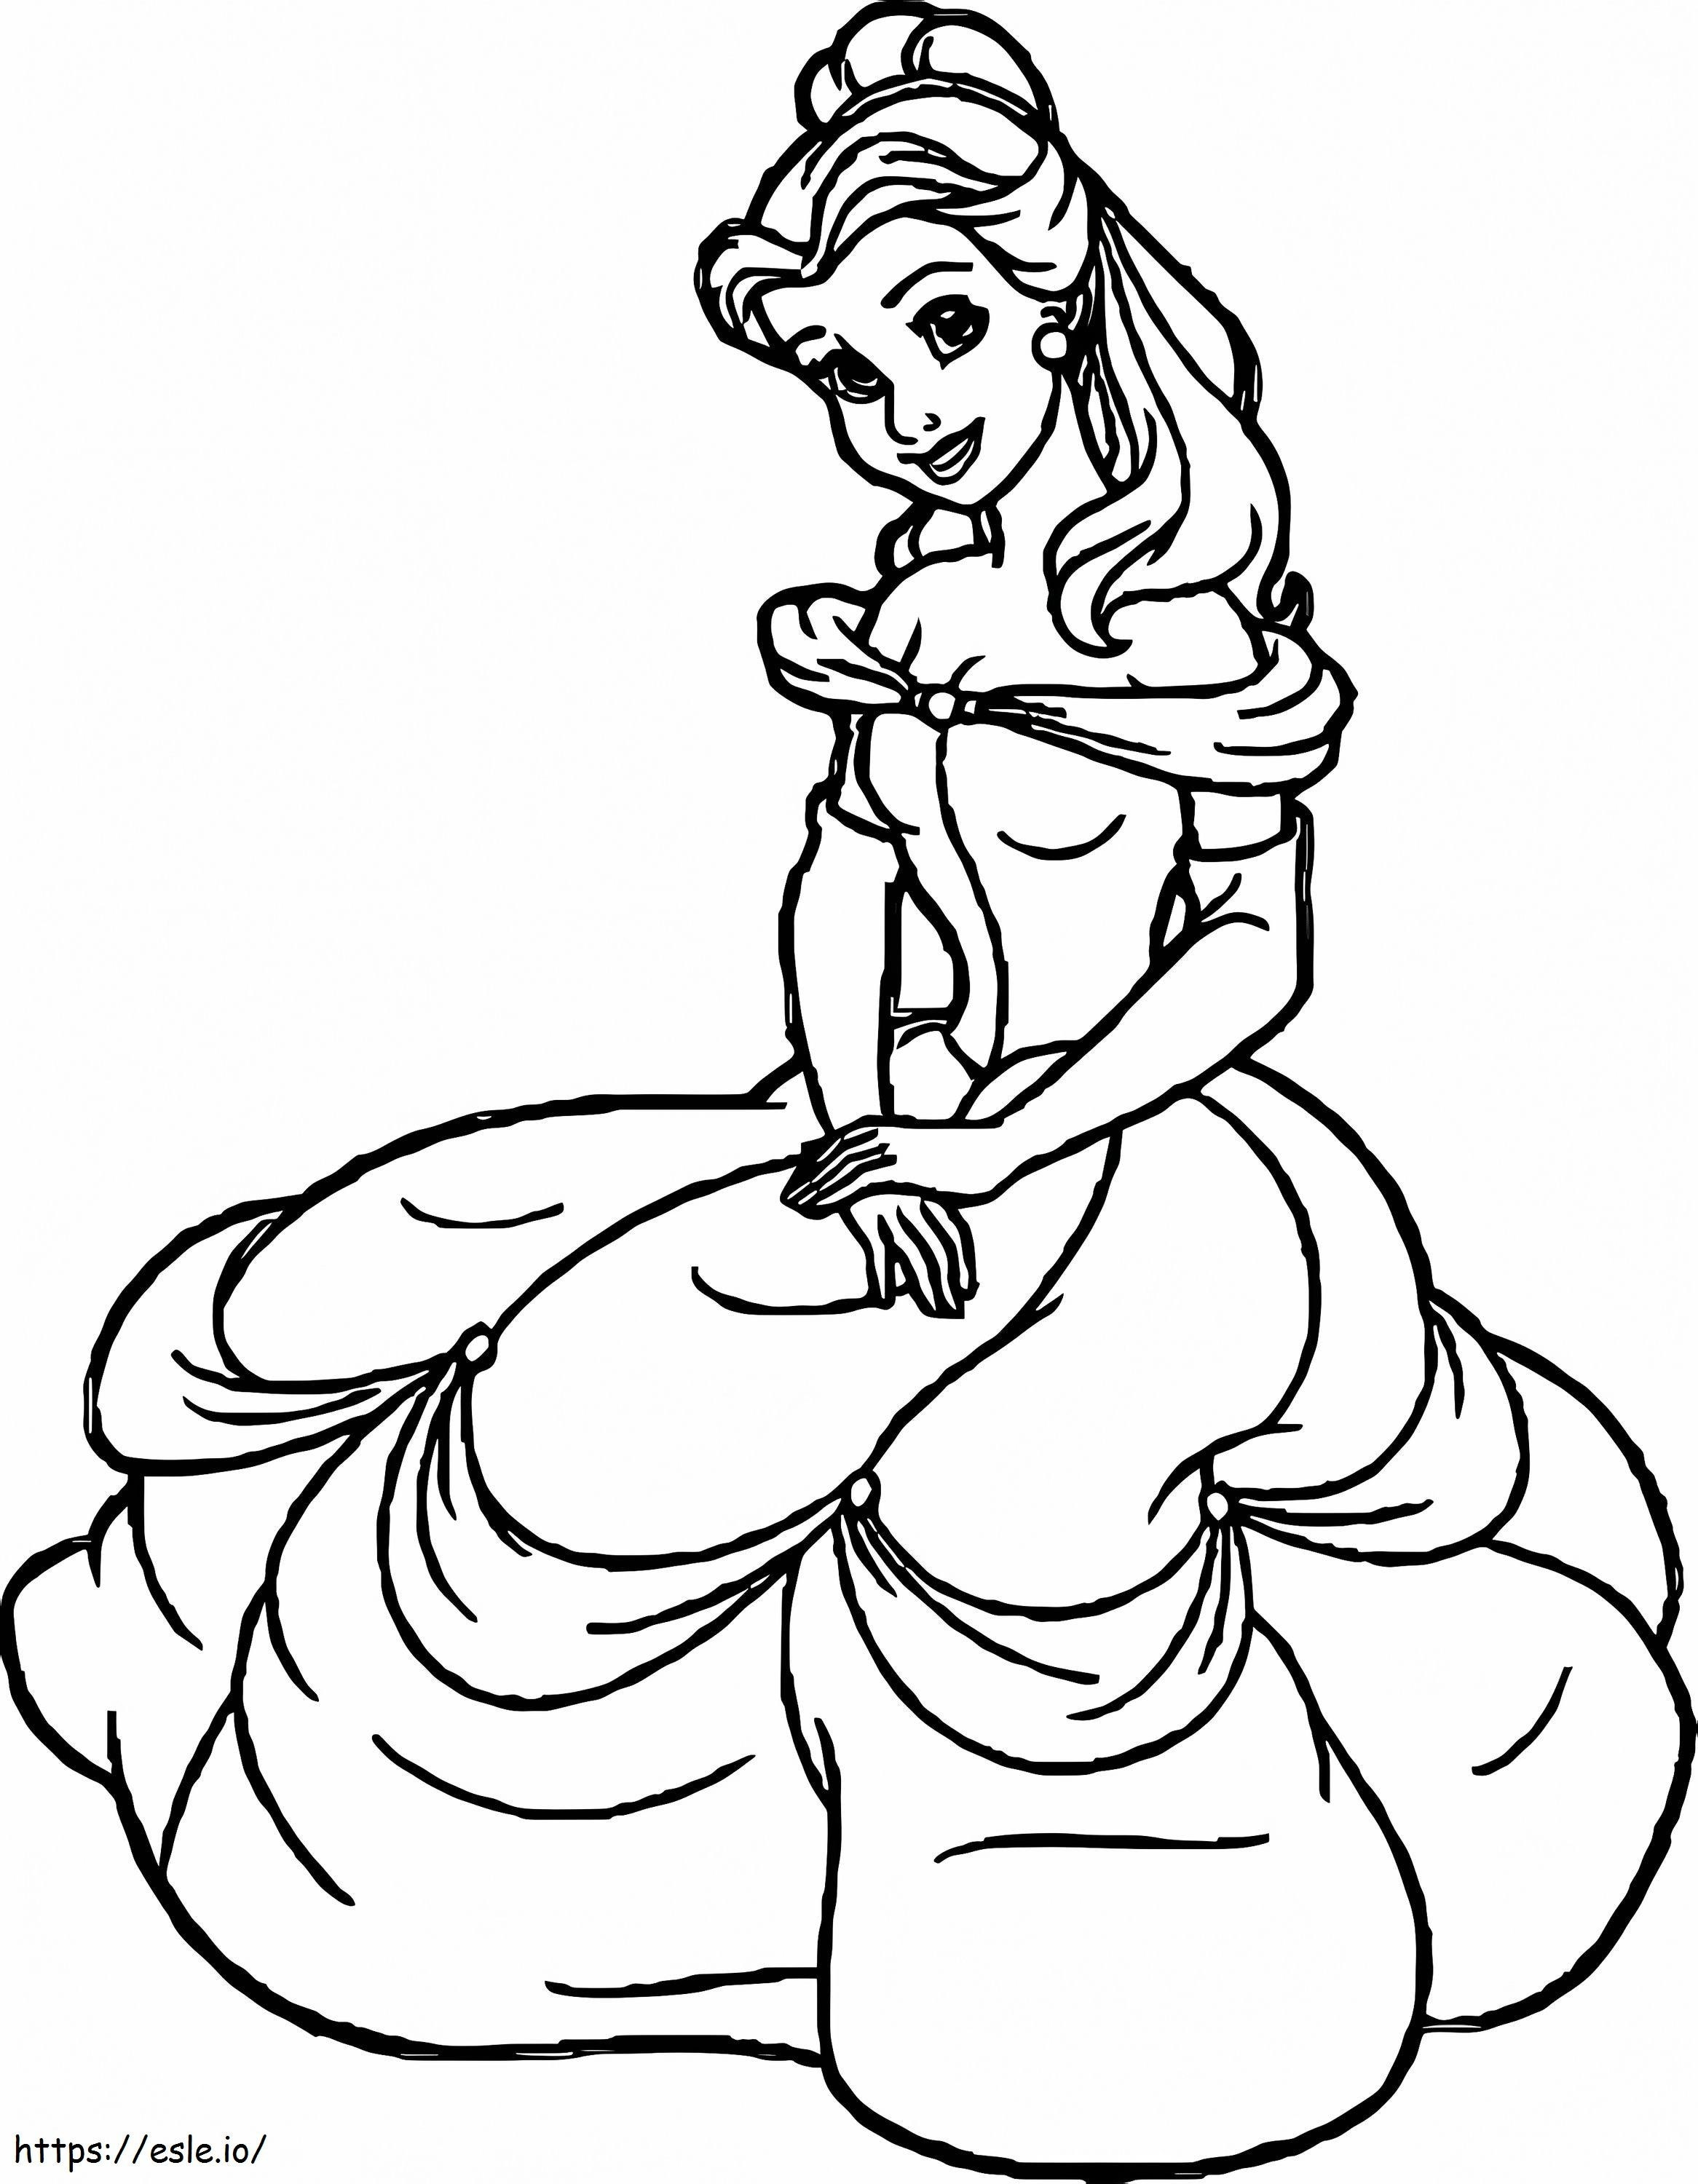 Aabefbddbadisney princess belle coloring perfect princess belle coloring coloring page